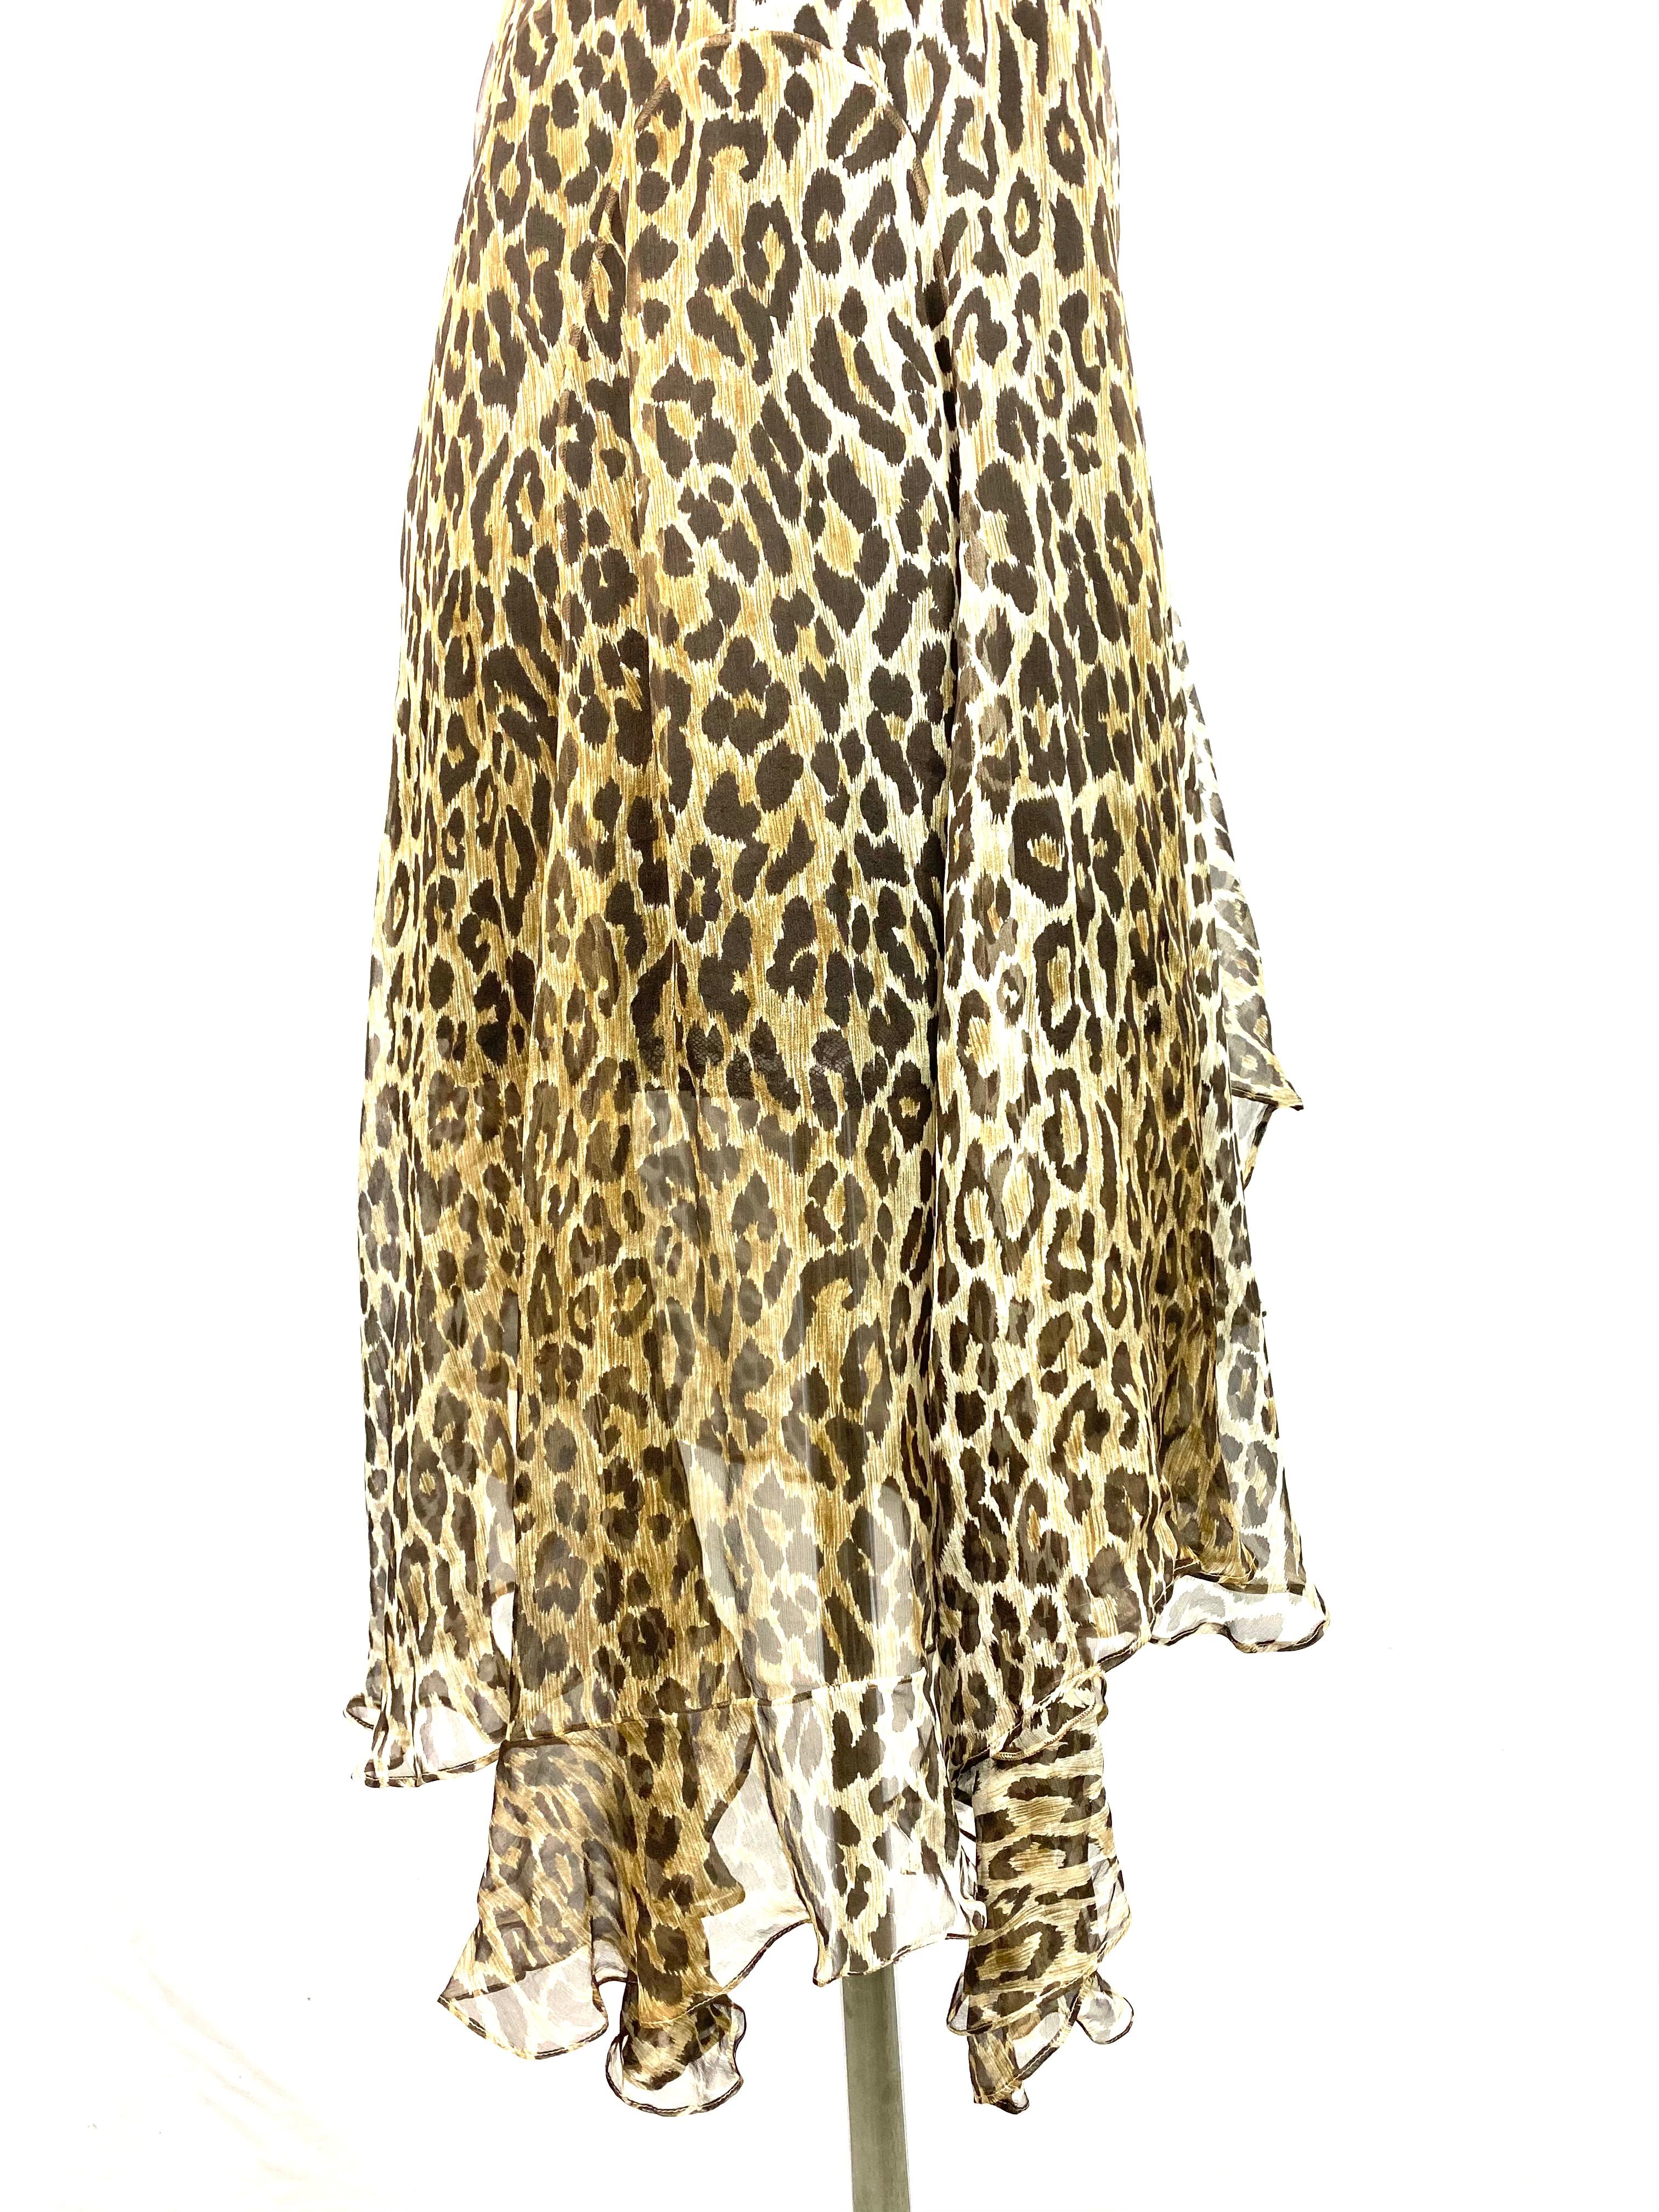 dolce gabbana leopard dress